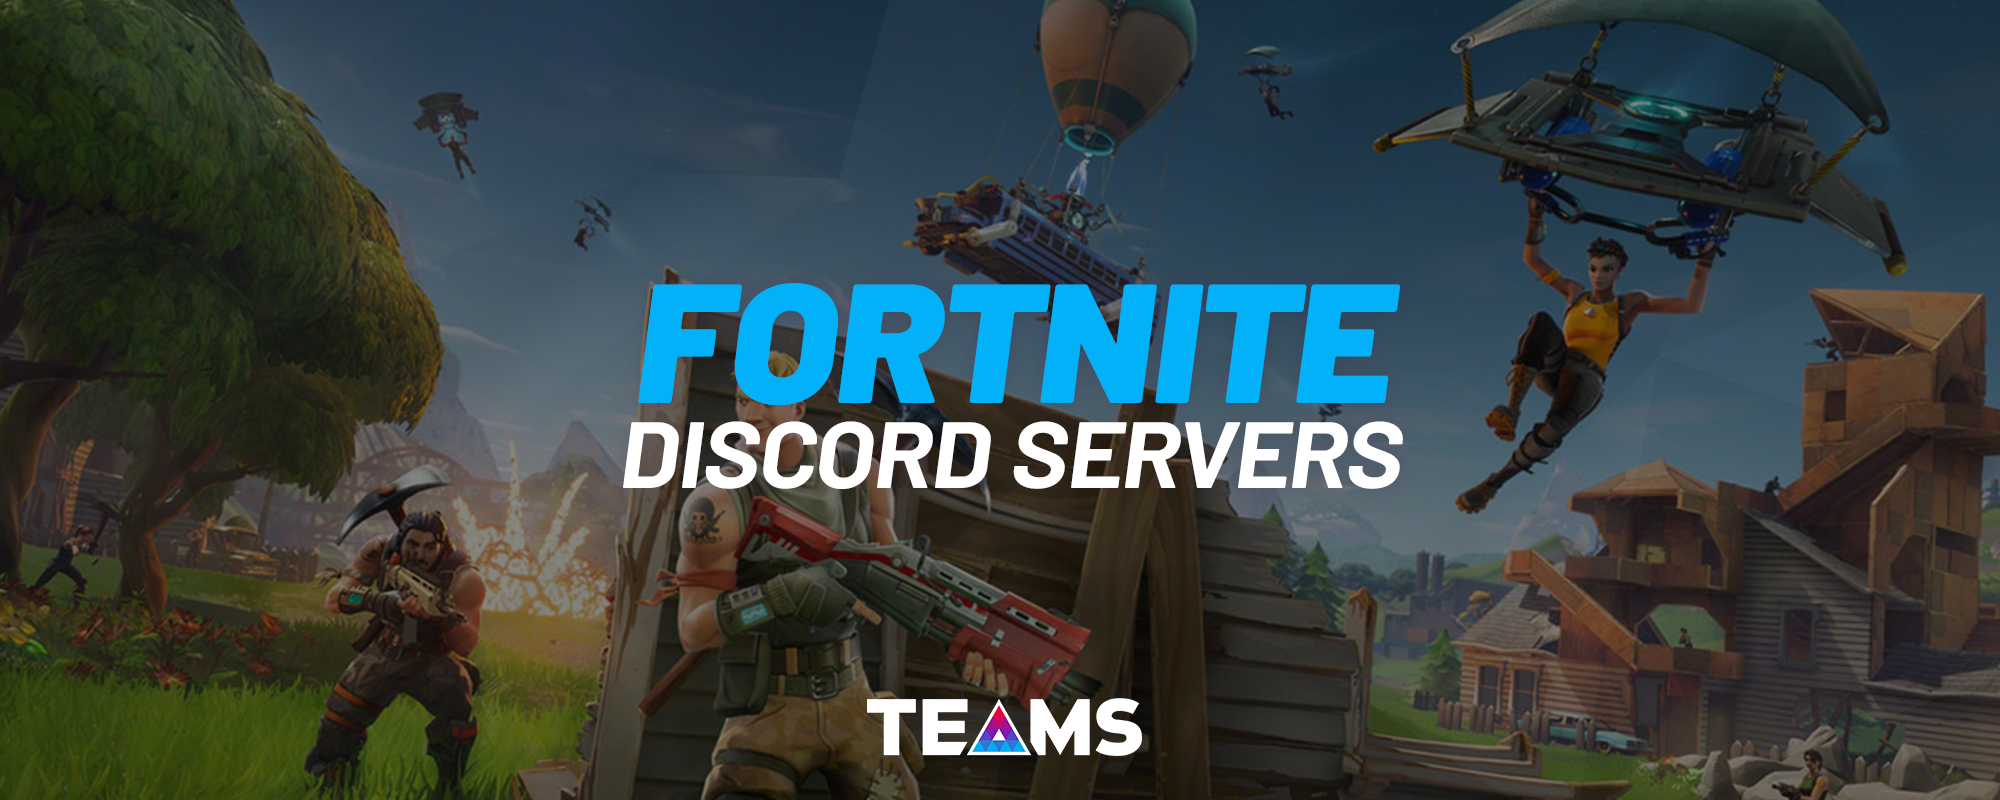 discord servers for fortnite teams